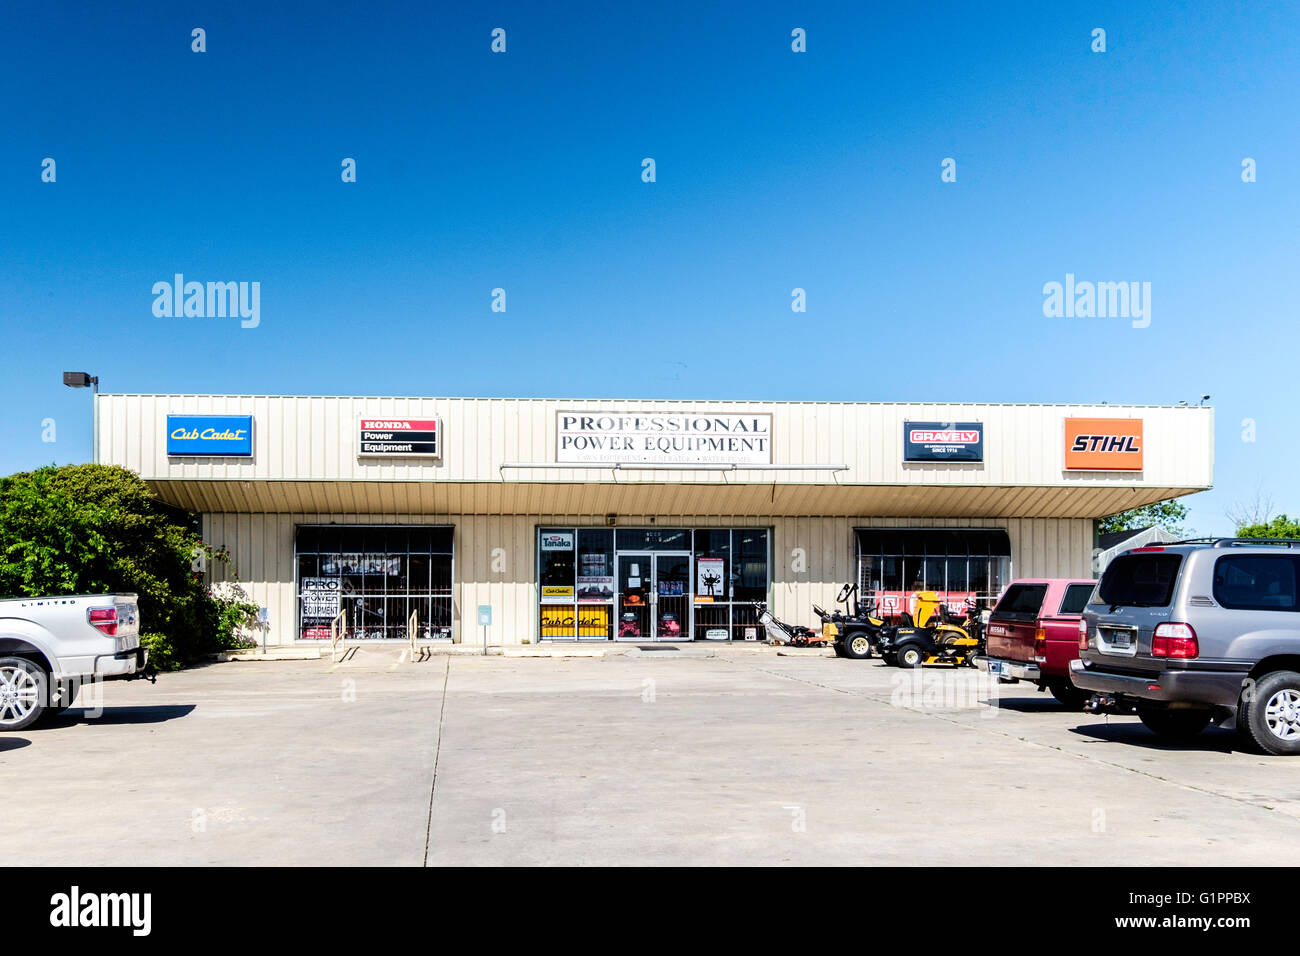 Das Exterieur des Professional Power Equipment, ein Geschäft in Oklahoma City, Oklahoma, USA. Stockfoto